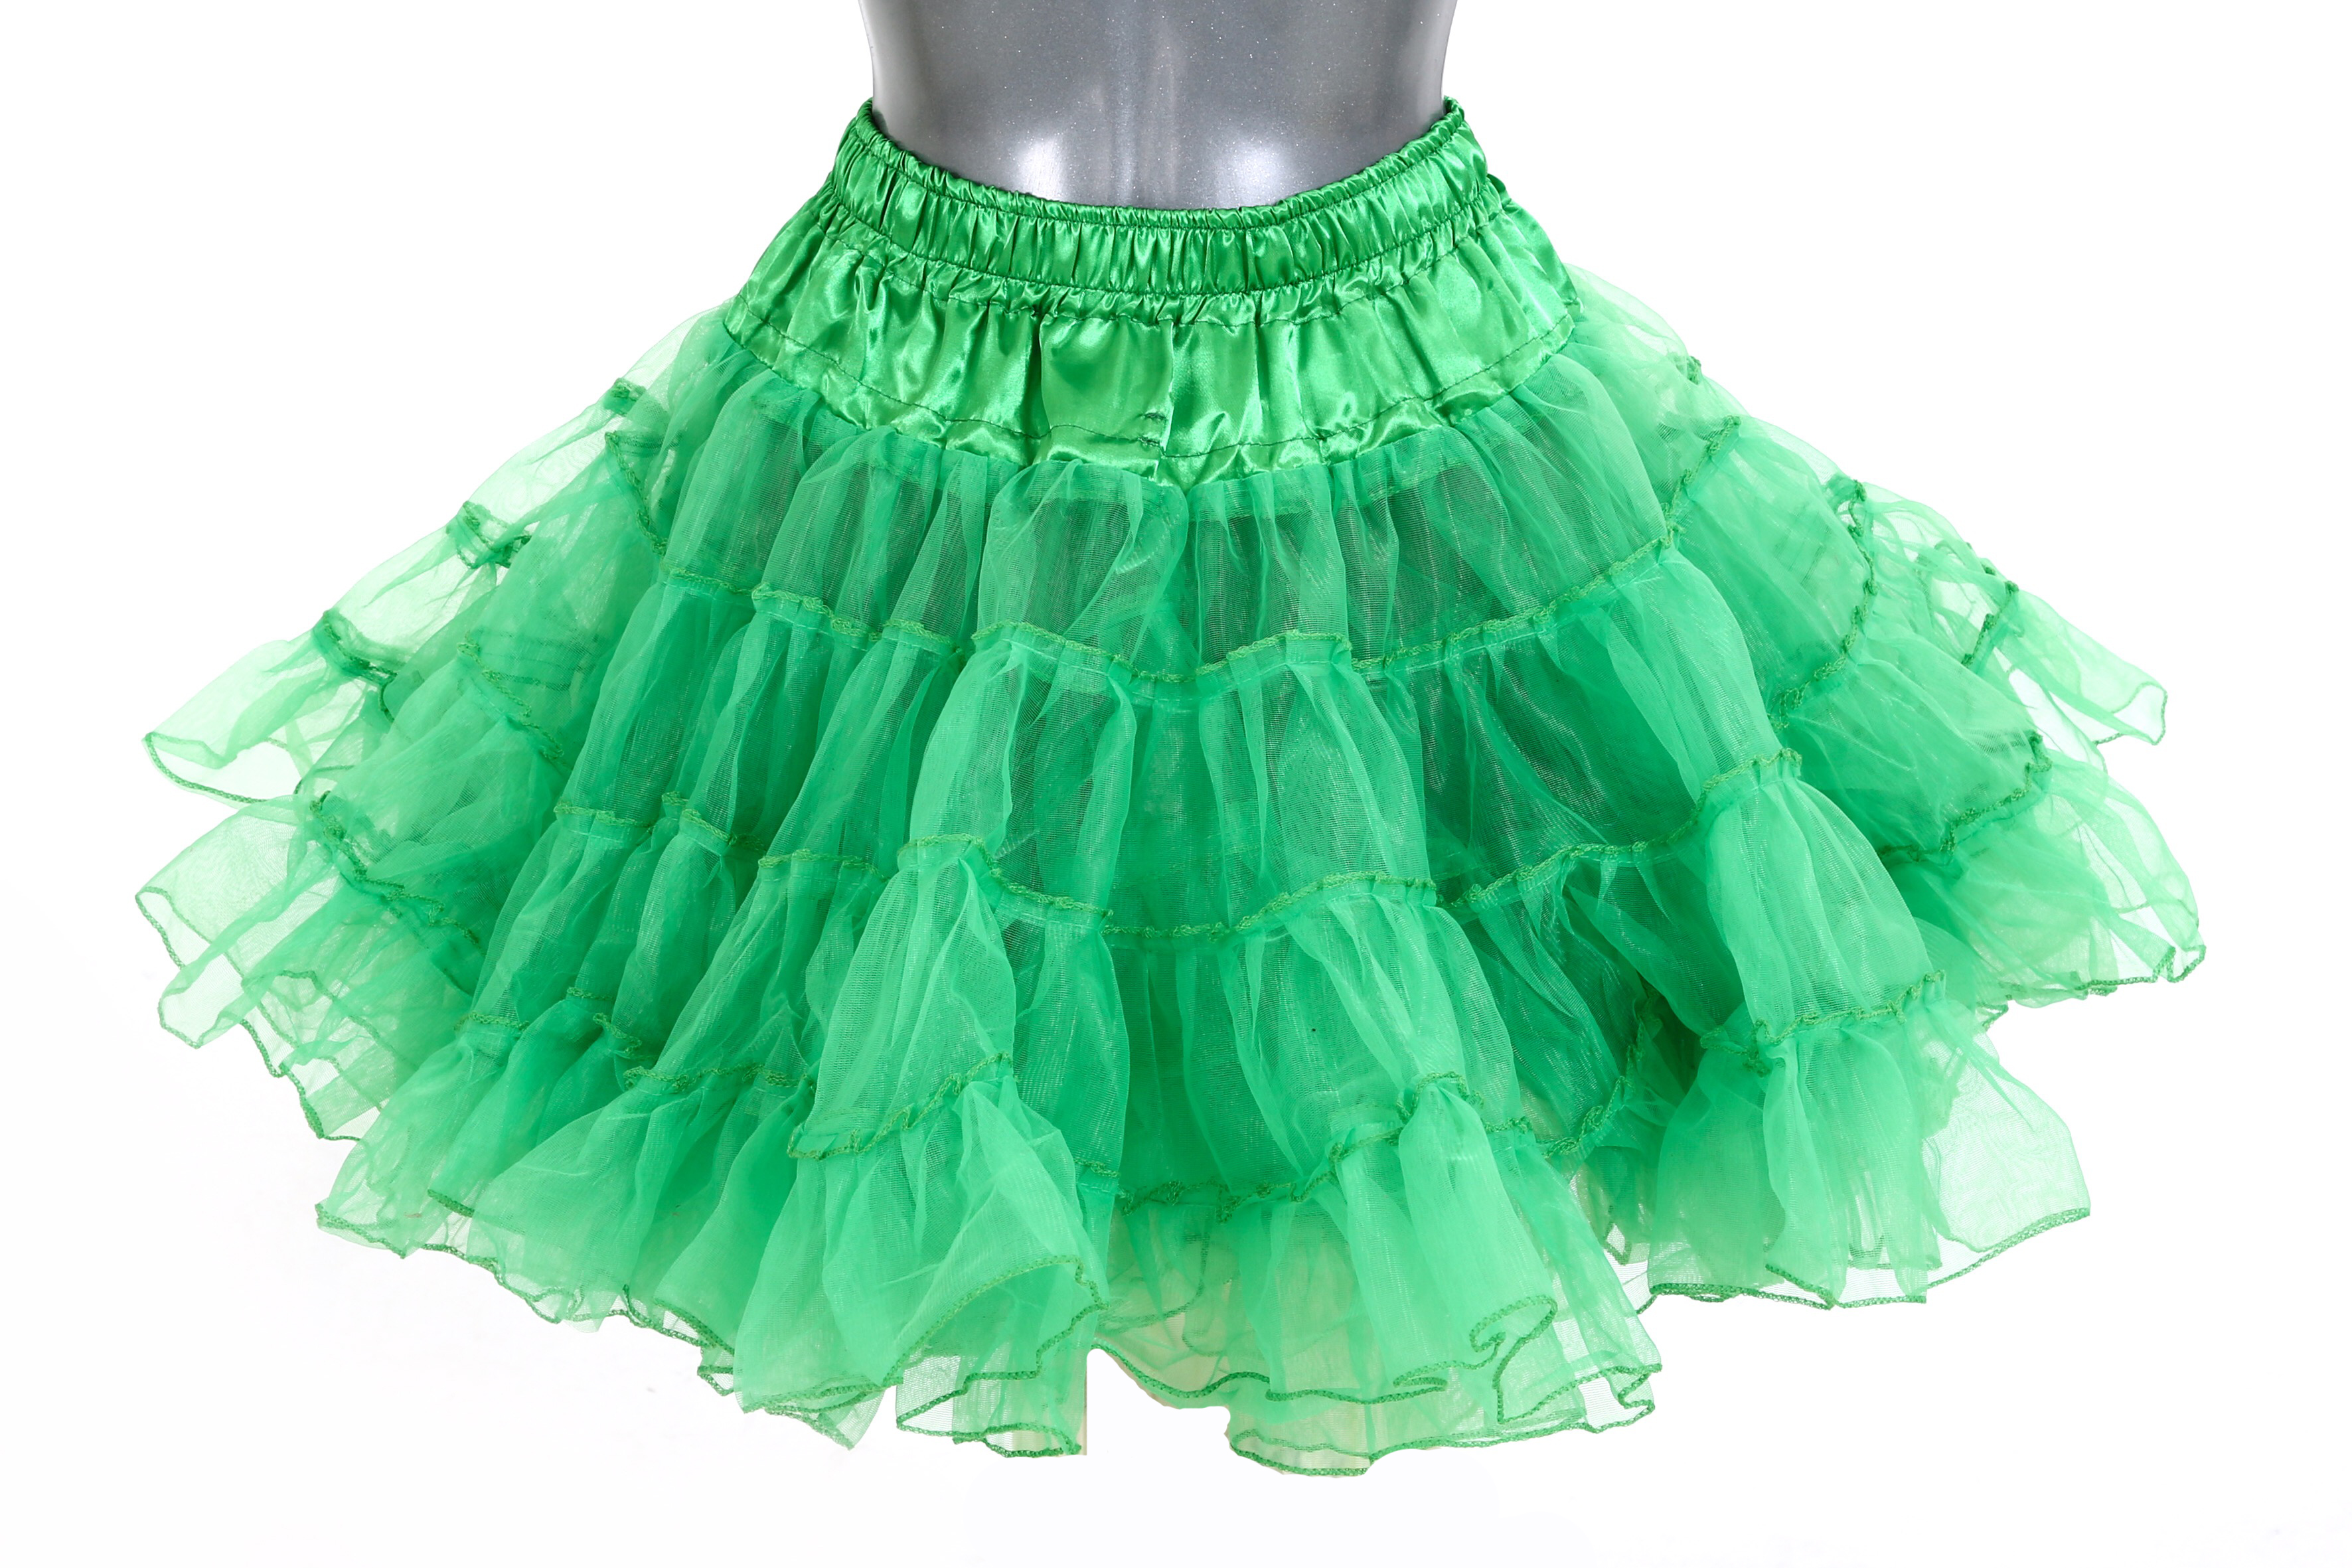 Consequent solide Melbourne Petticoat groen lang 2 laags - Koopjeshal Tilburg